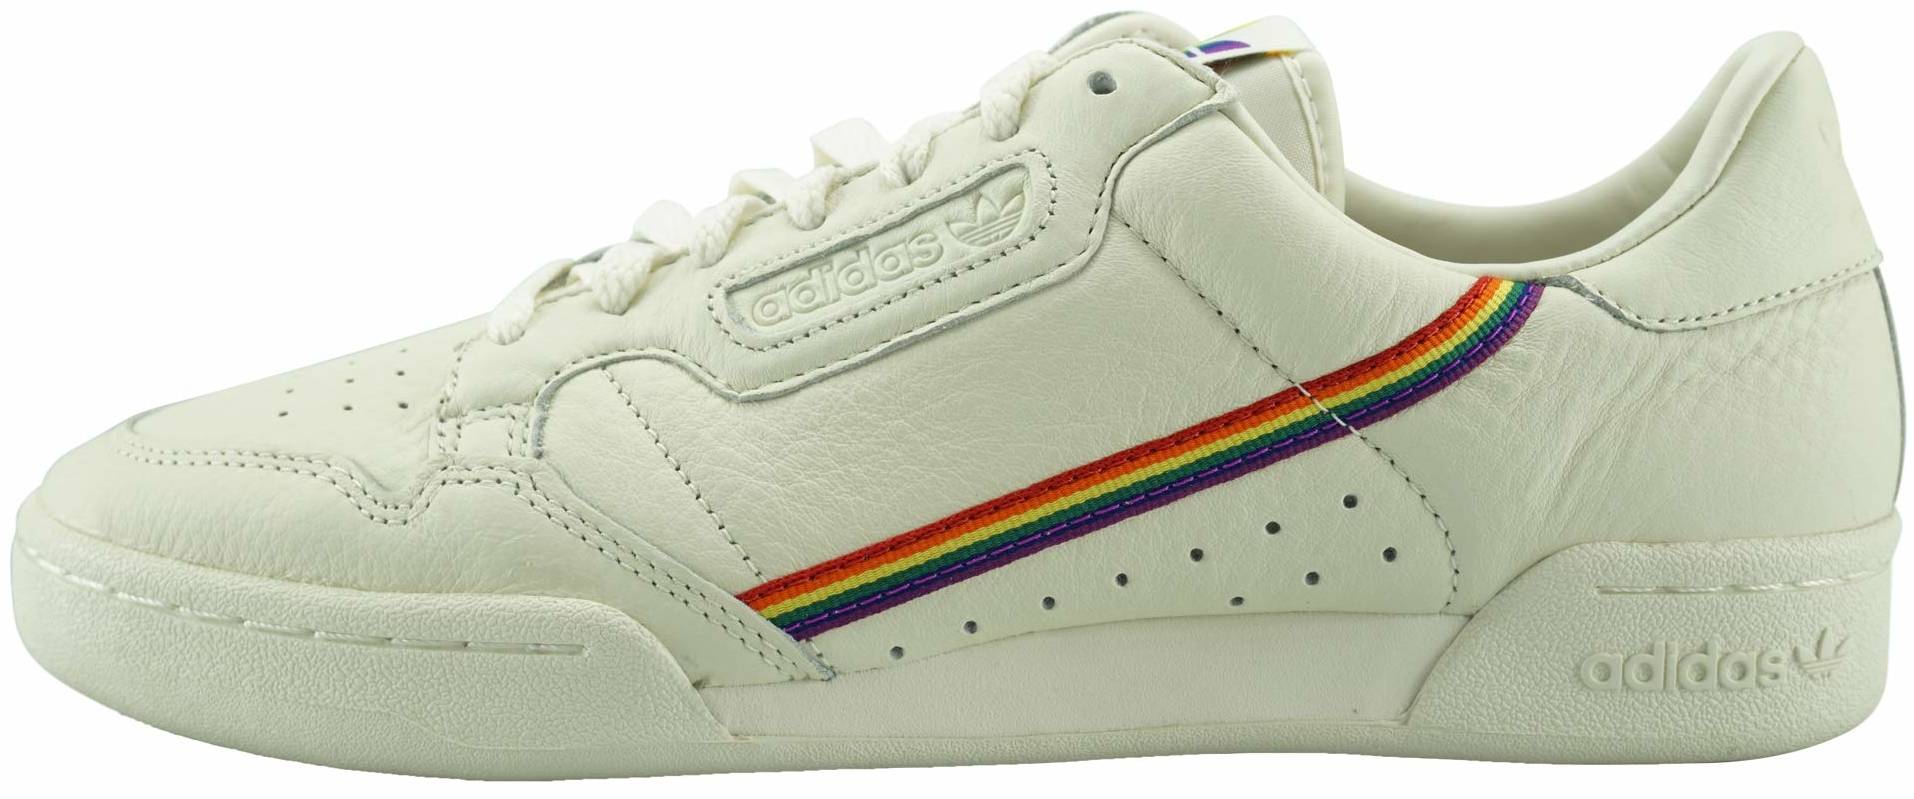 Adidas Continental 80 Pride sneakers in 1 color | RunRepeat